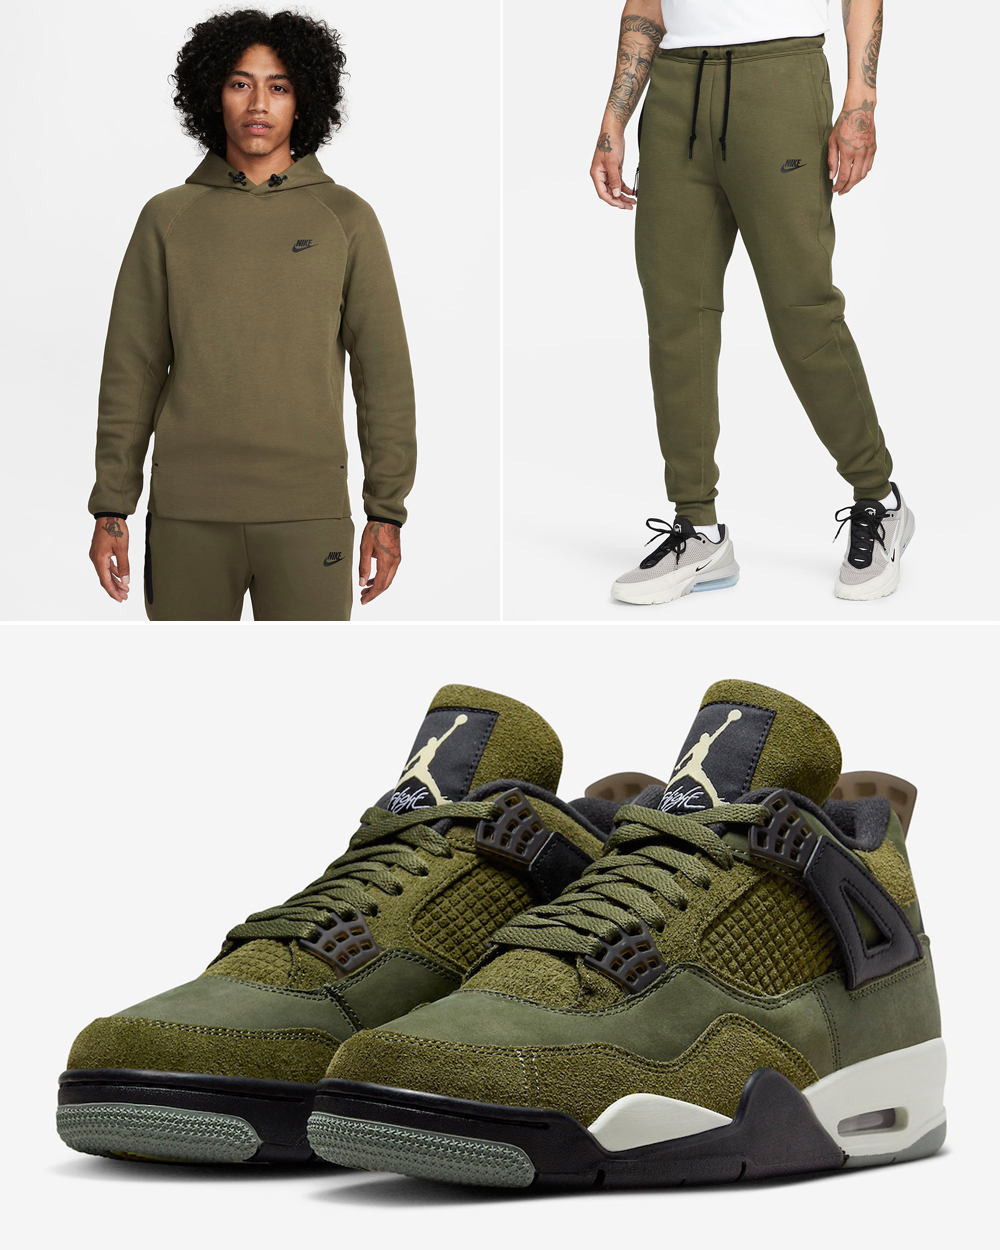 Air-Jordan-4-Craft-Olive-Nike-Tech-Fleece-Clothing